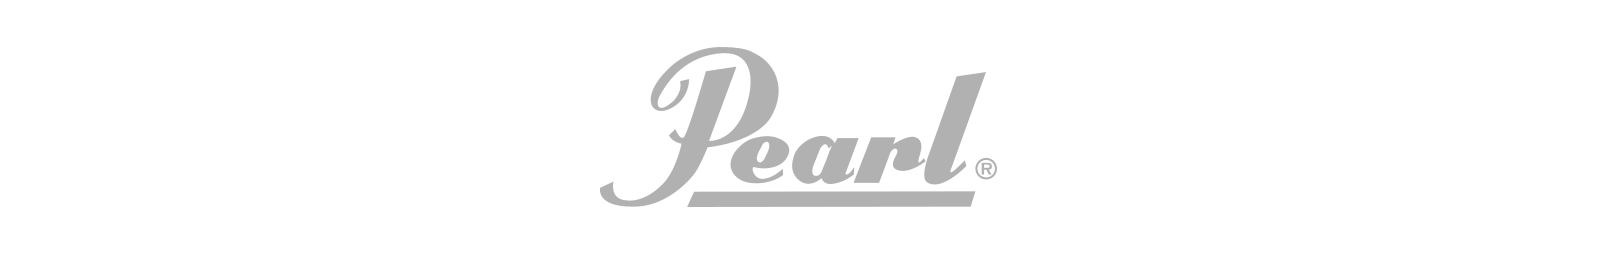 pearl.